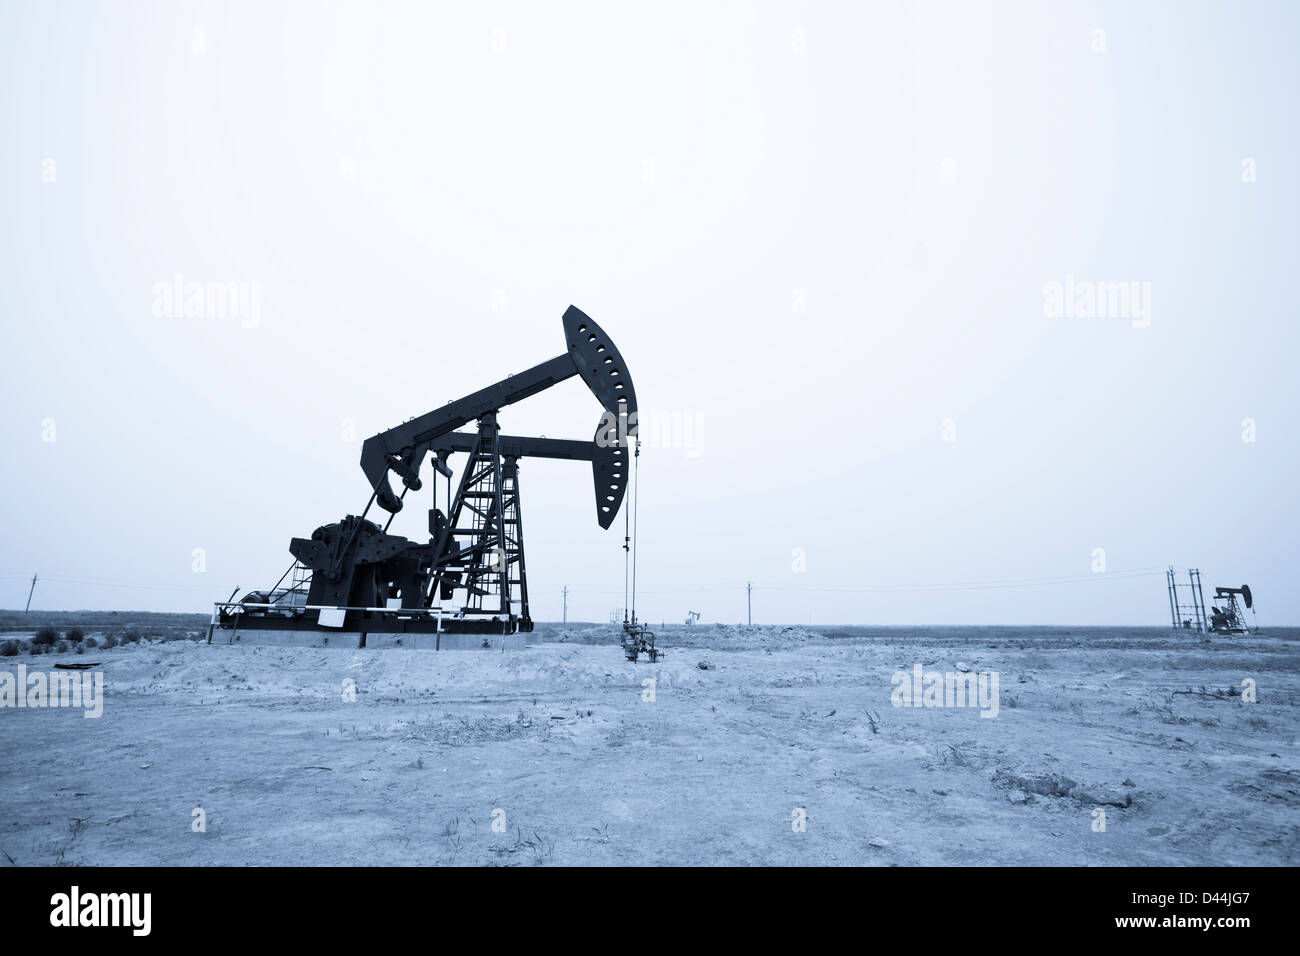 Oil industry Stock Photo